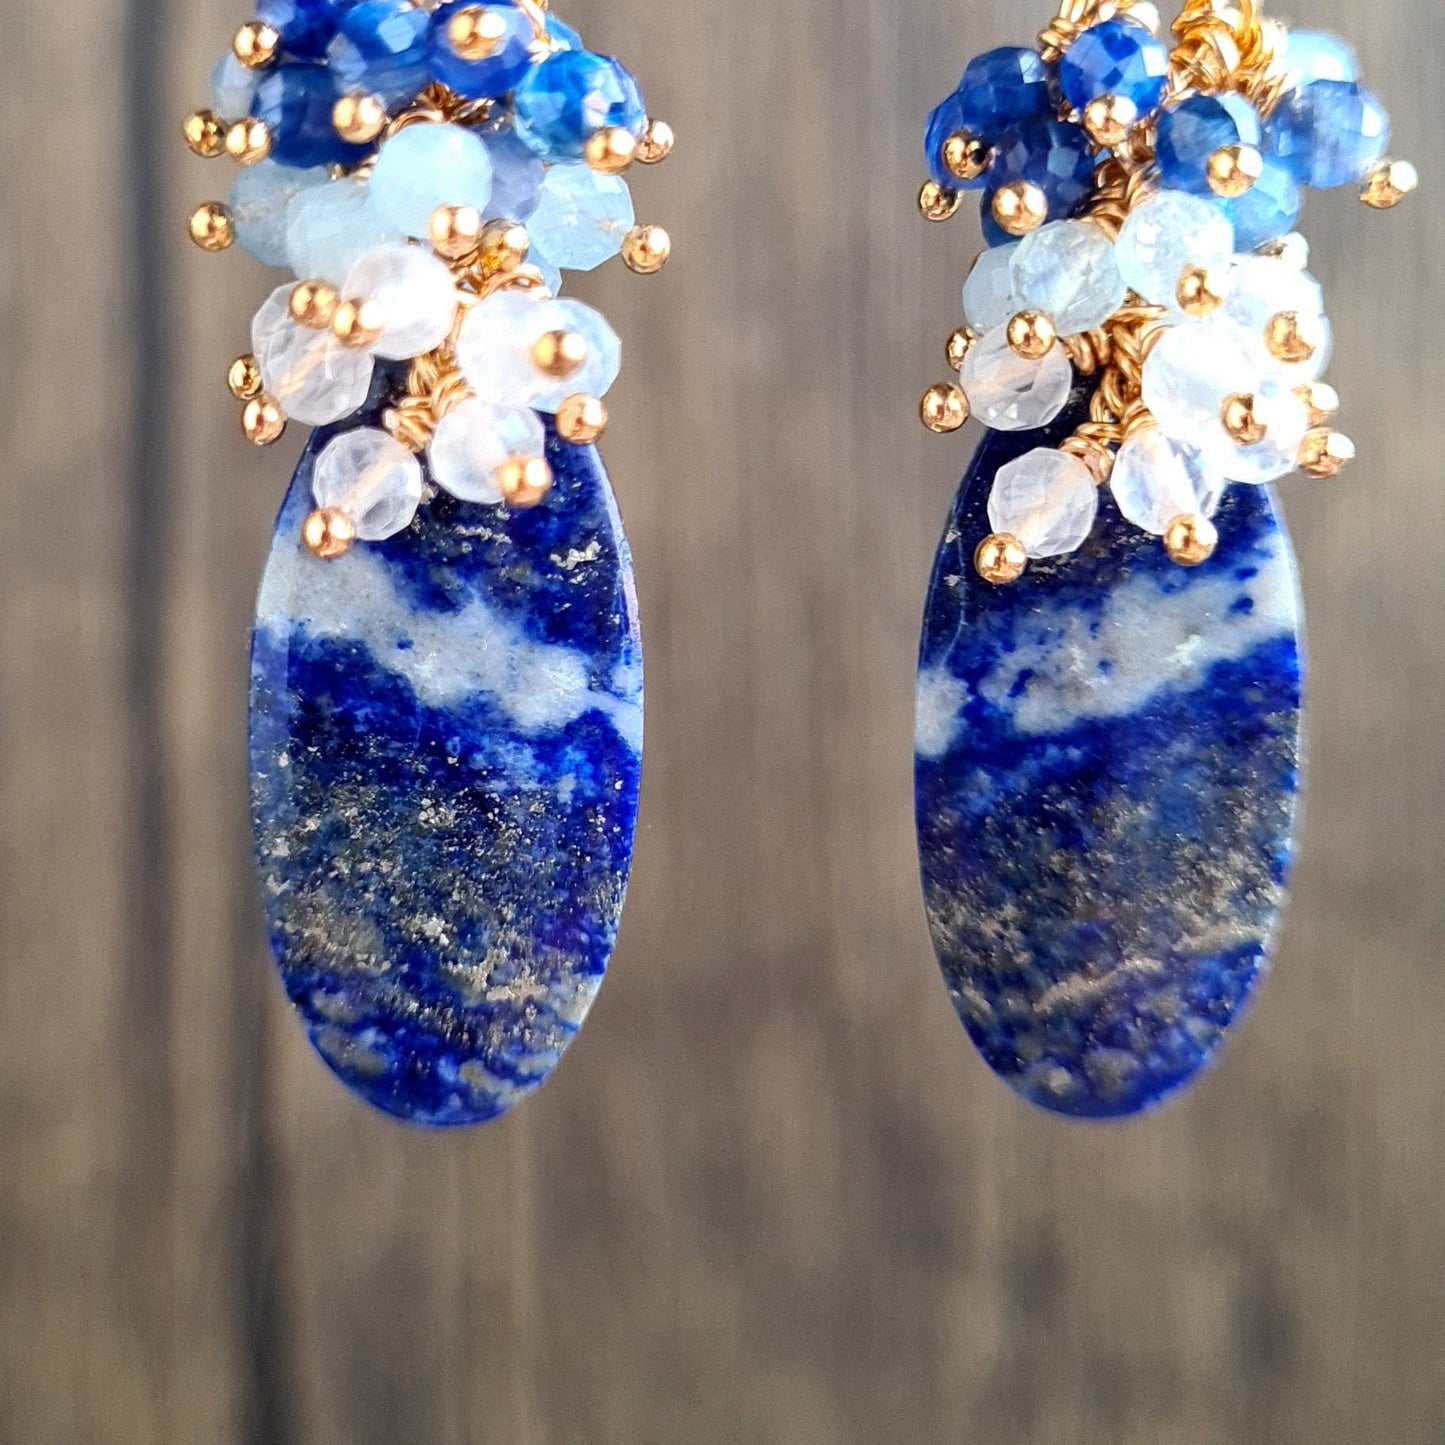 Lapis Lazuli with rainbow moonstone, aquamarine and kyanite gemstone cluster earrings